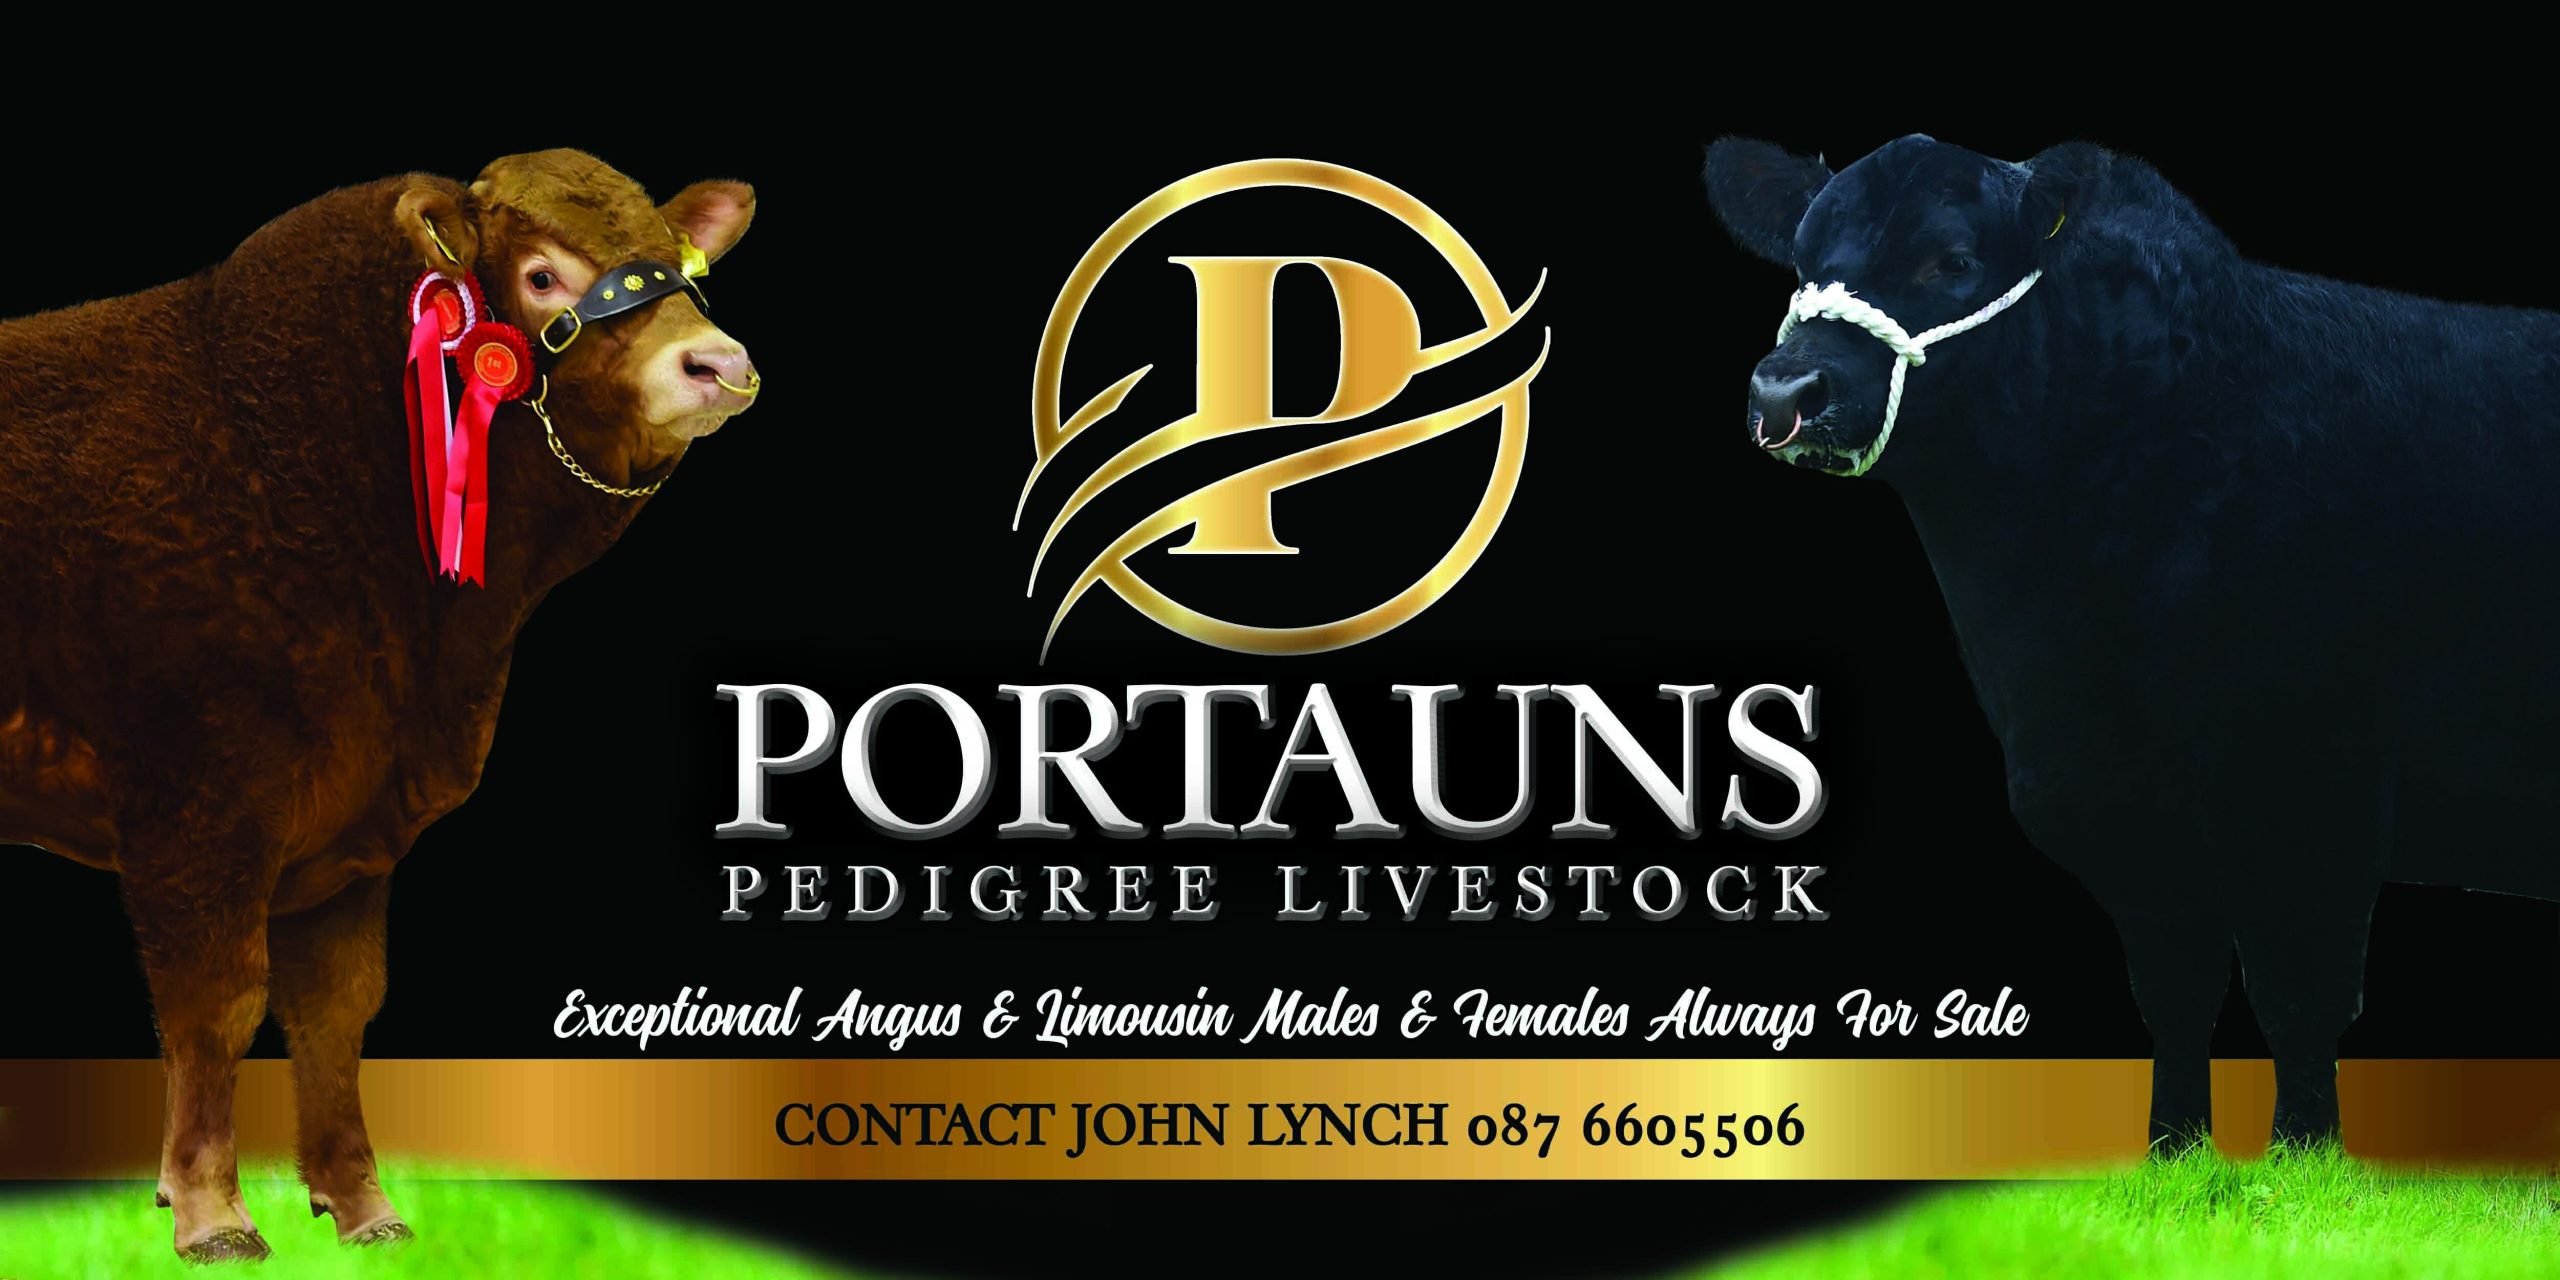 products-portauns_pedigree_livestock_lr-scaled